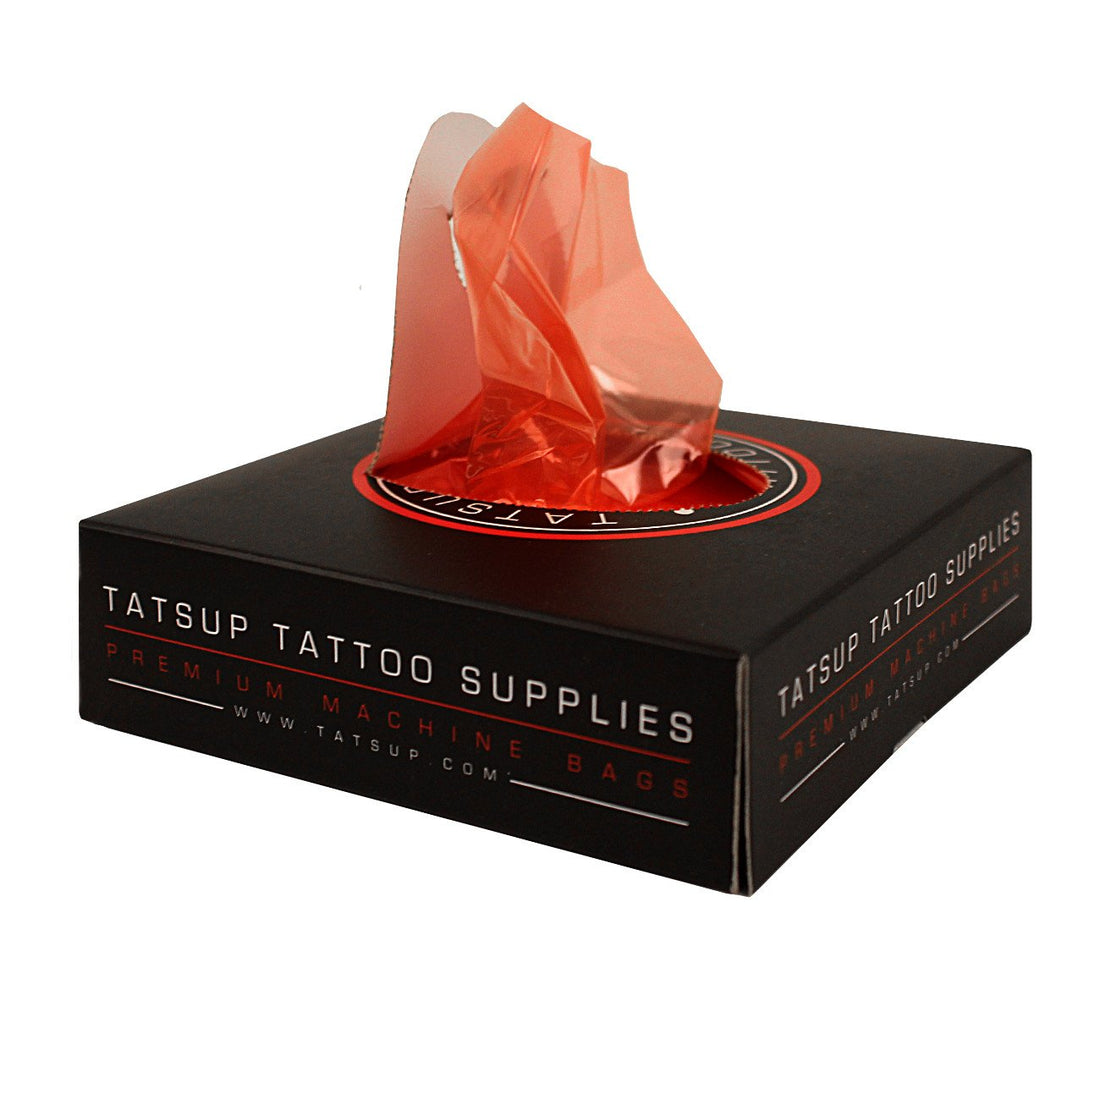 Tatsup Premium Machine Bags Studio Supplies Tatsup 